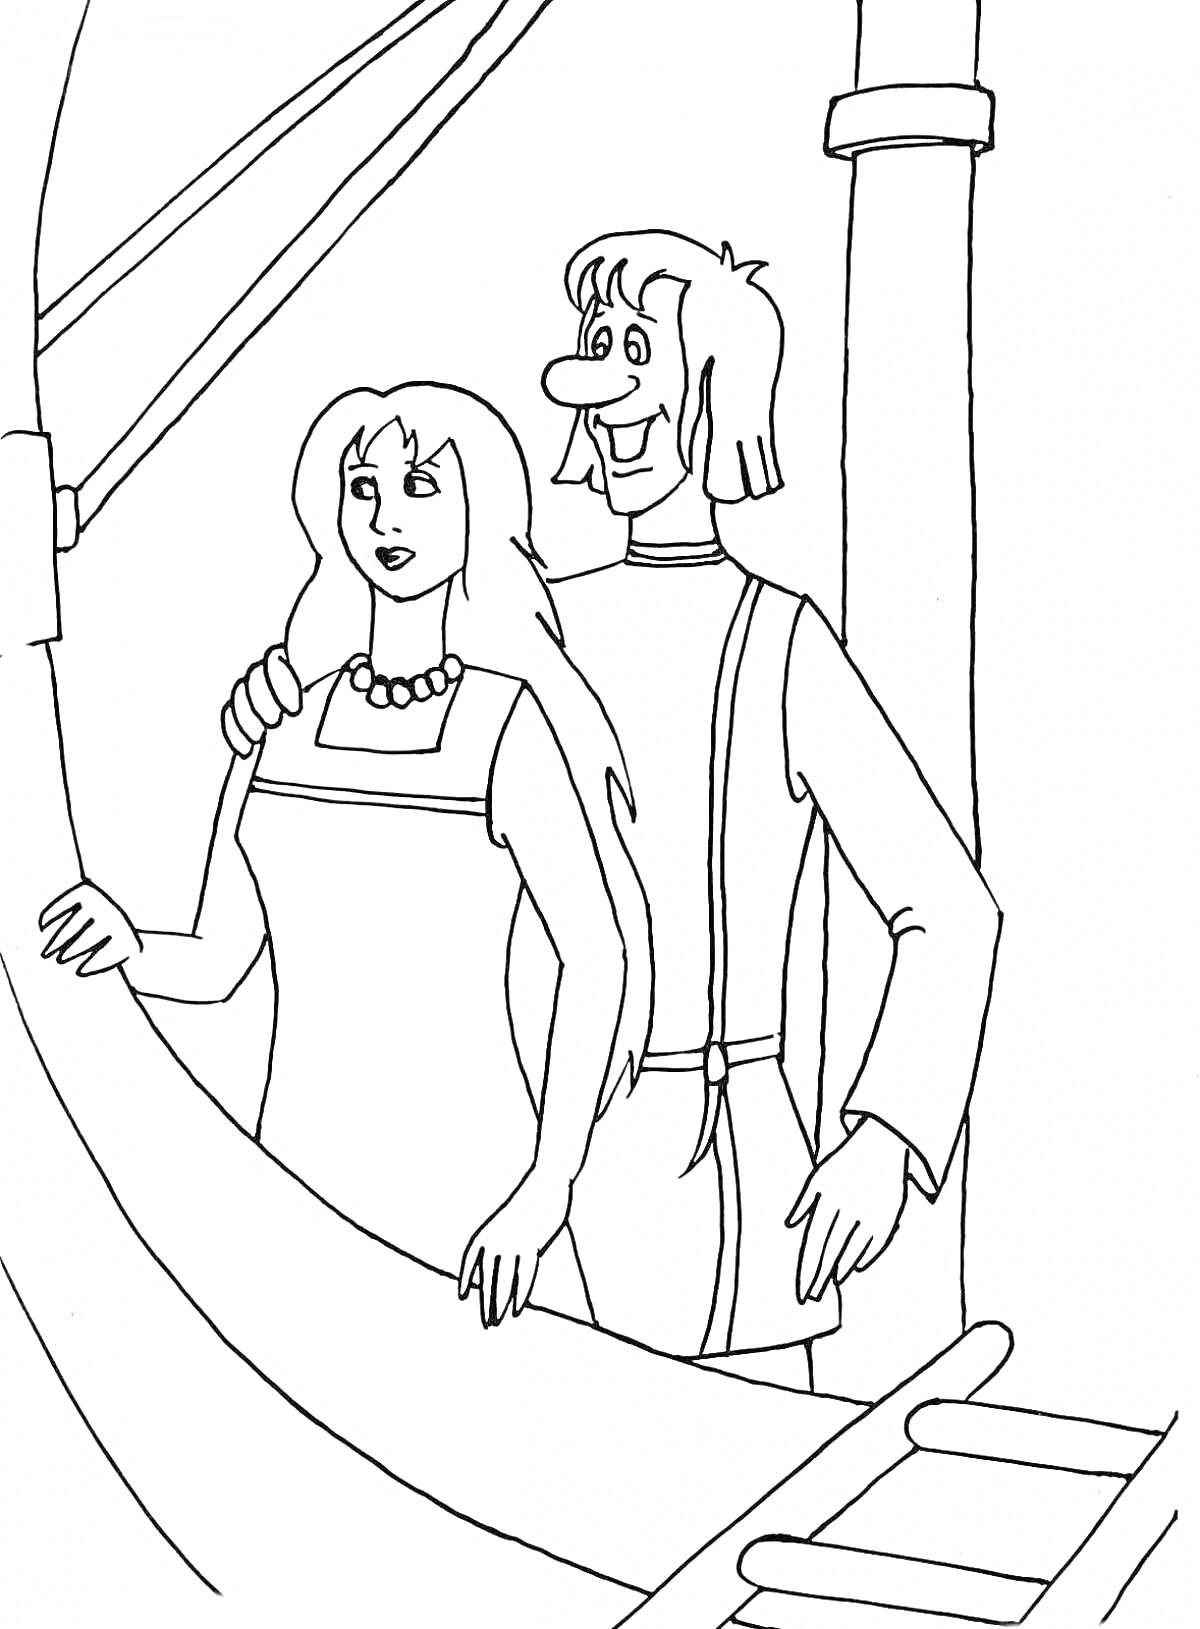 Раскраска Пара мультяшных персонажей на корабле